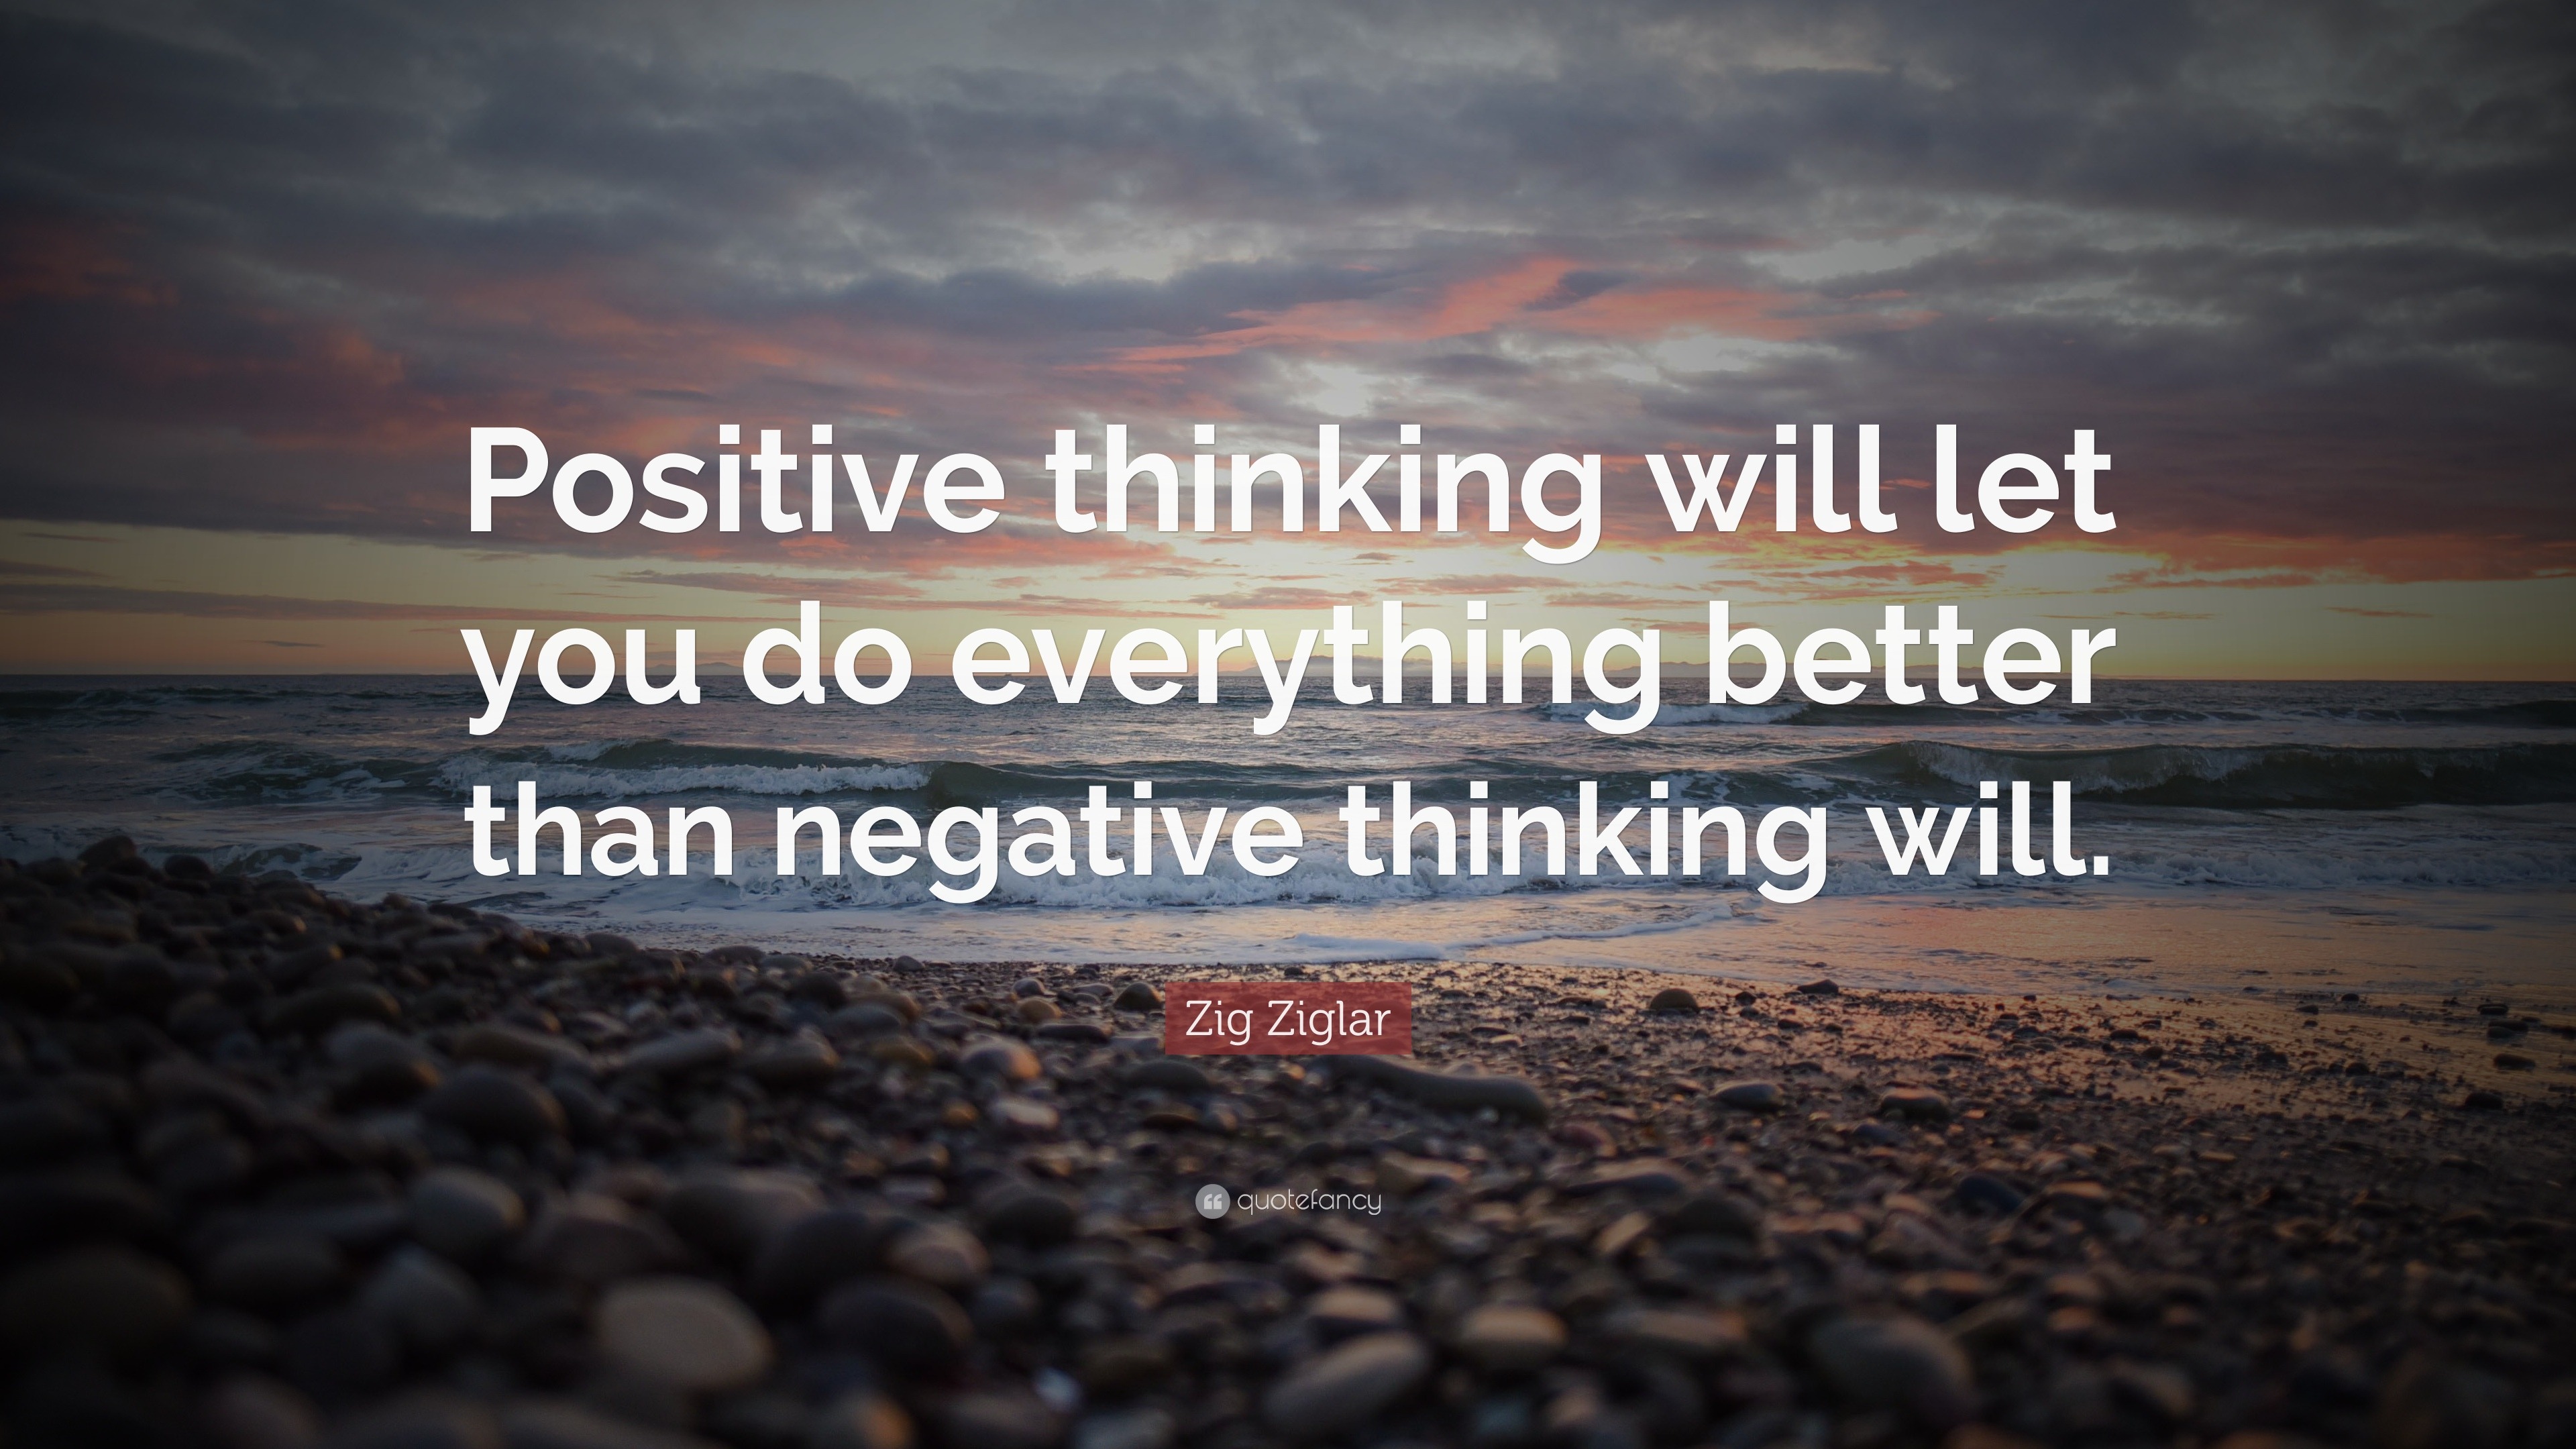 Zig Ziglar Quote “Positive thinking will let you do